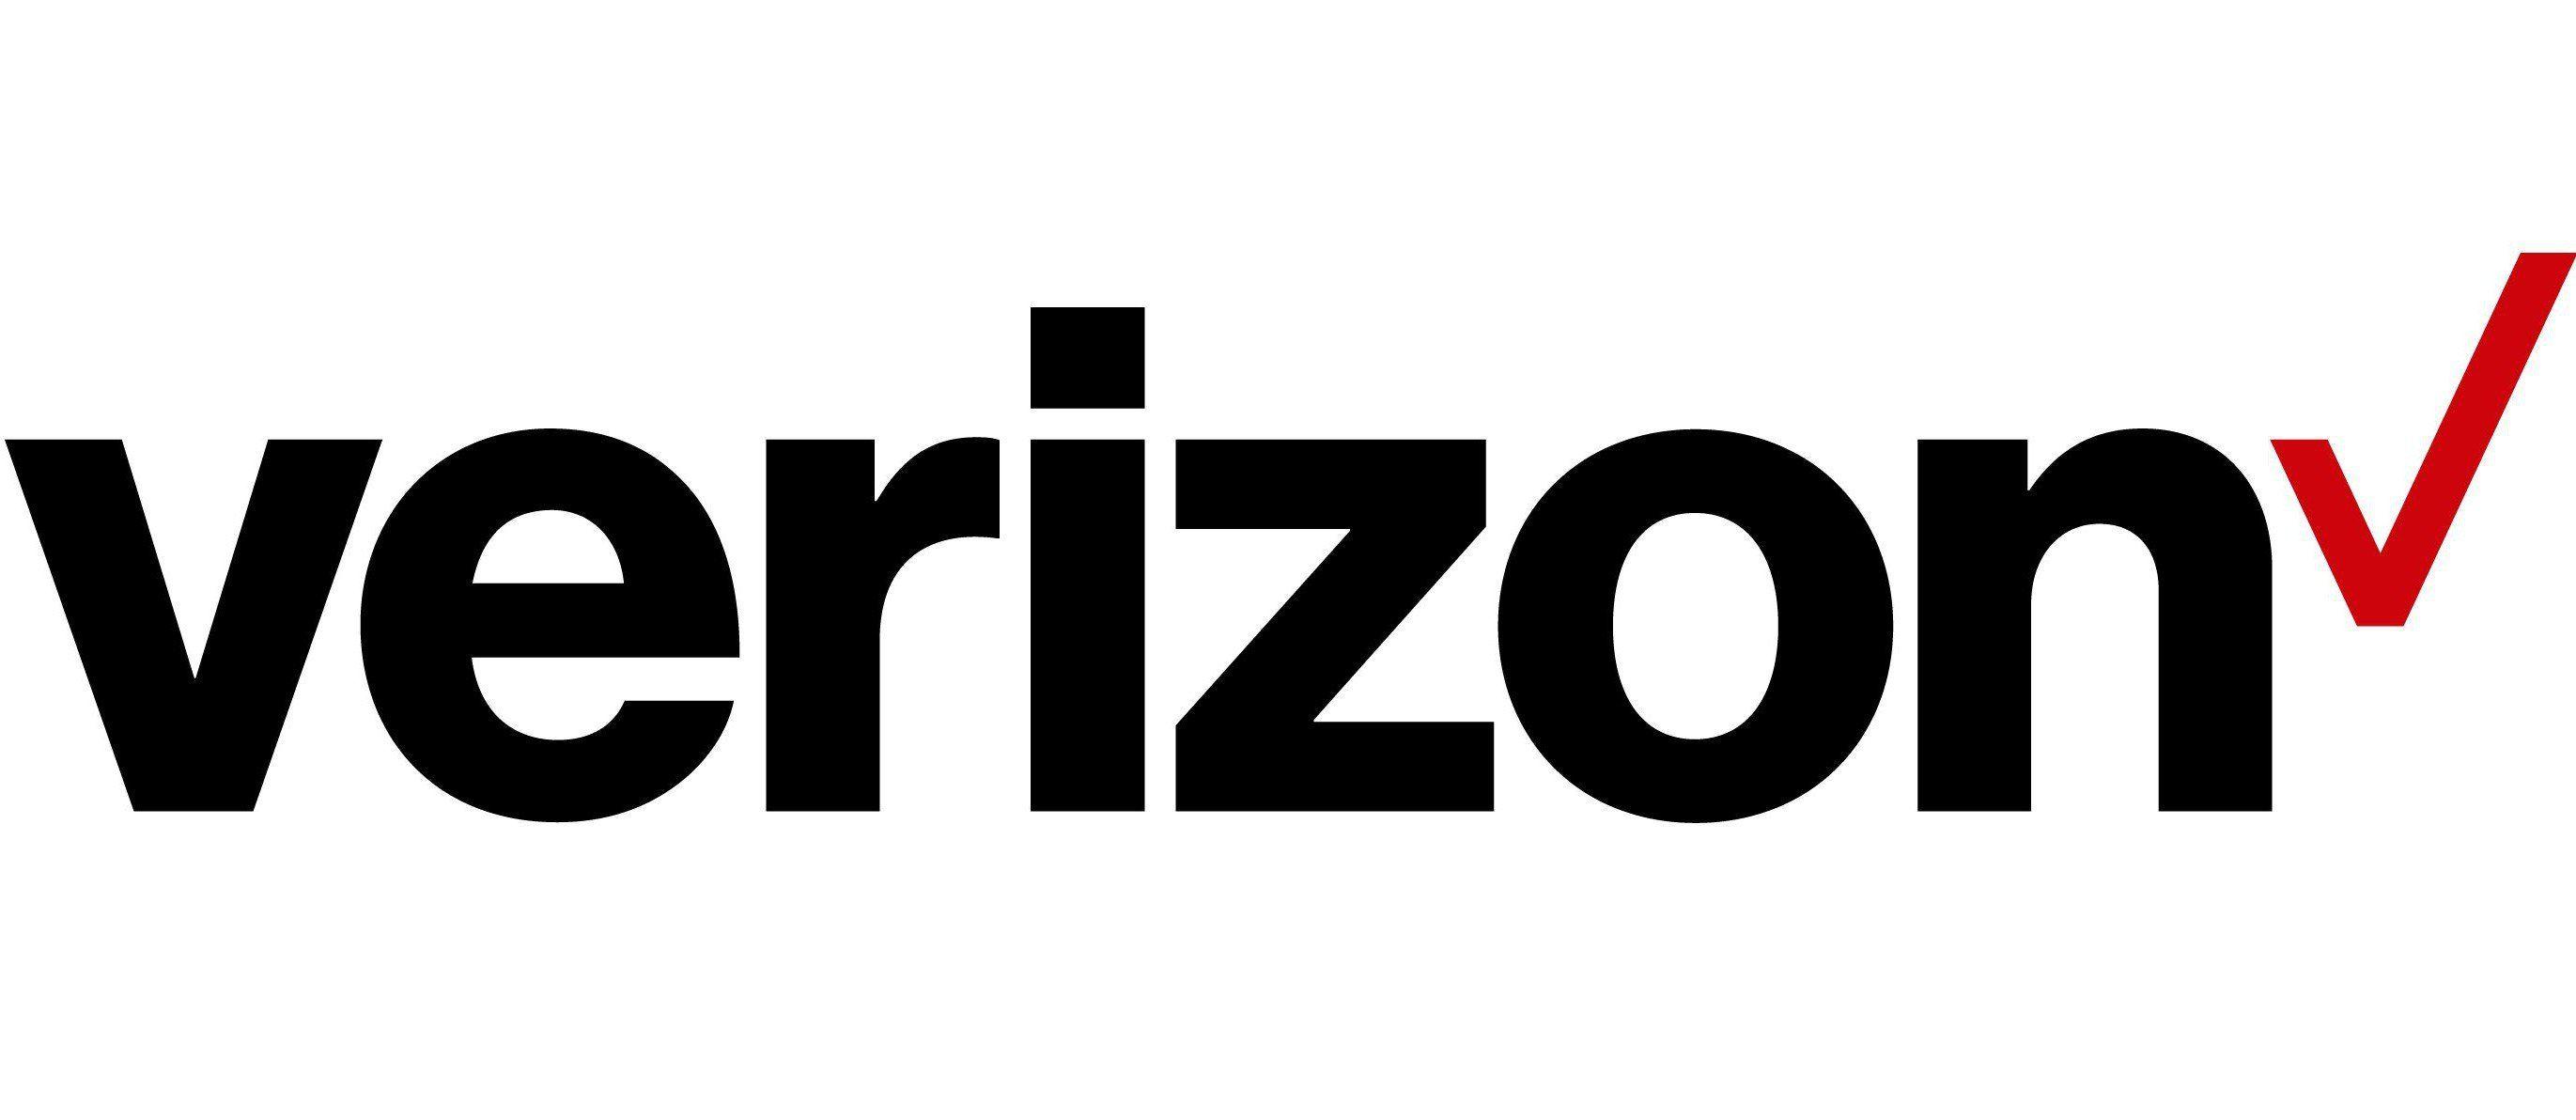 Verixon Logo - T-Mobile CEO mocks new Verizon logo | KFOR.com